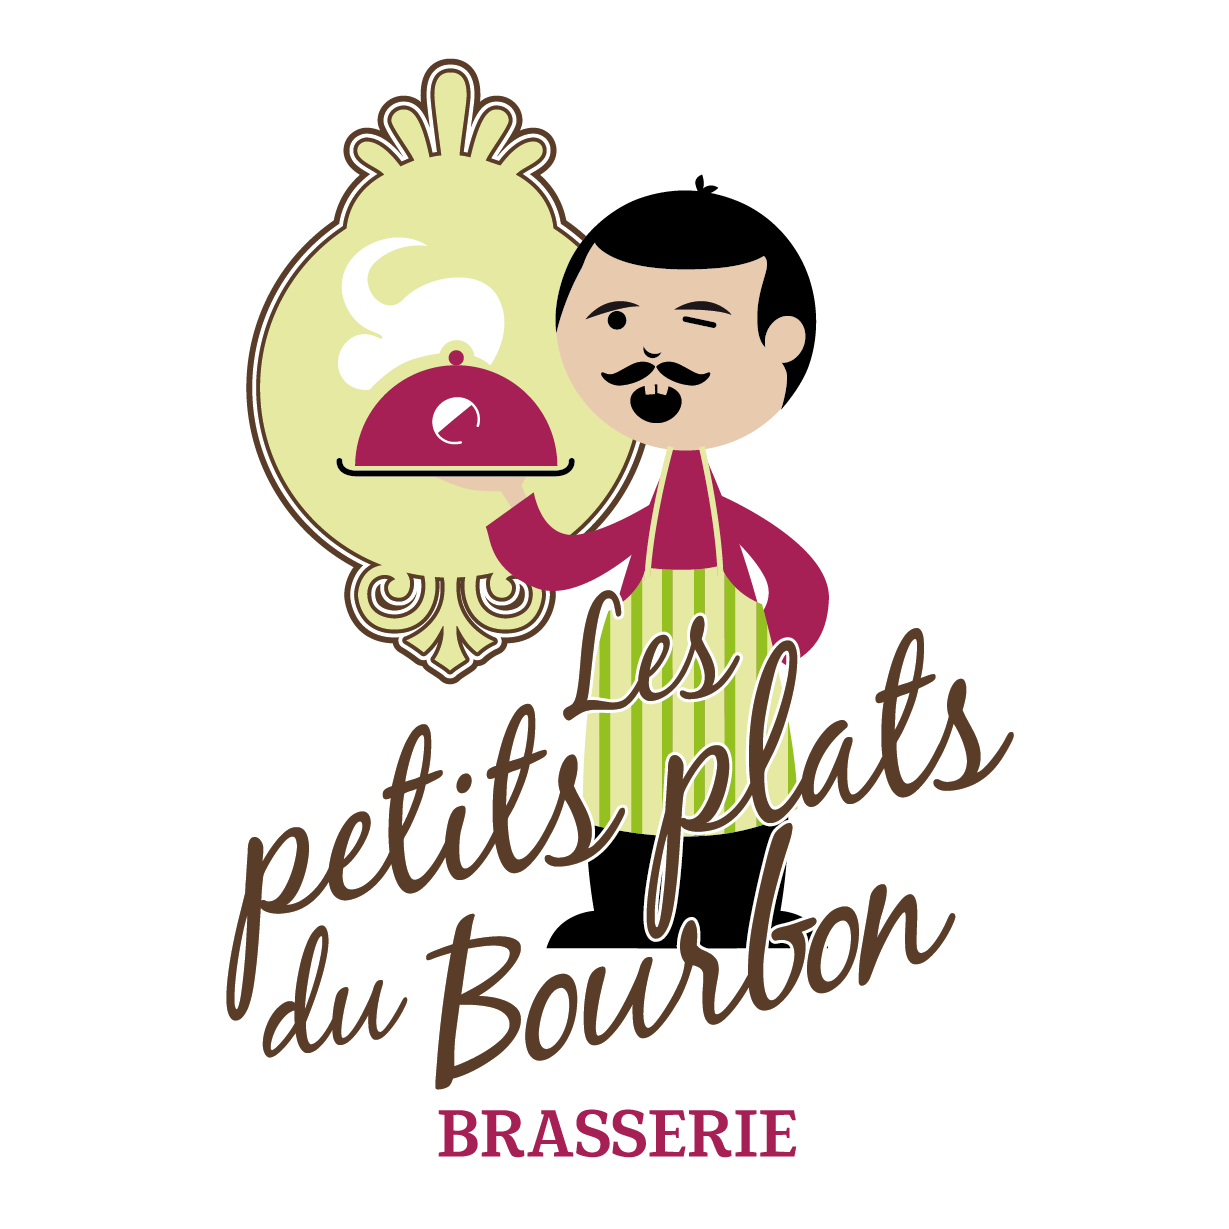 Restaurant Les Petits Plats du Bourbon